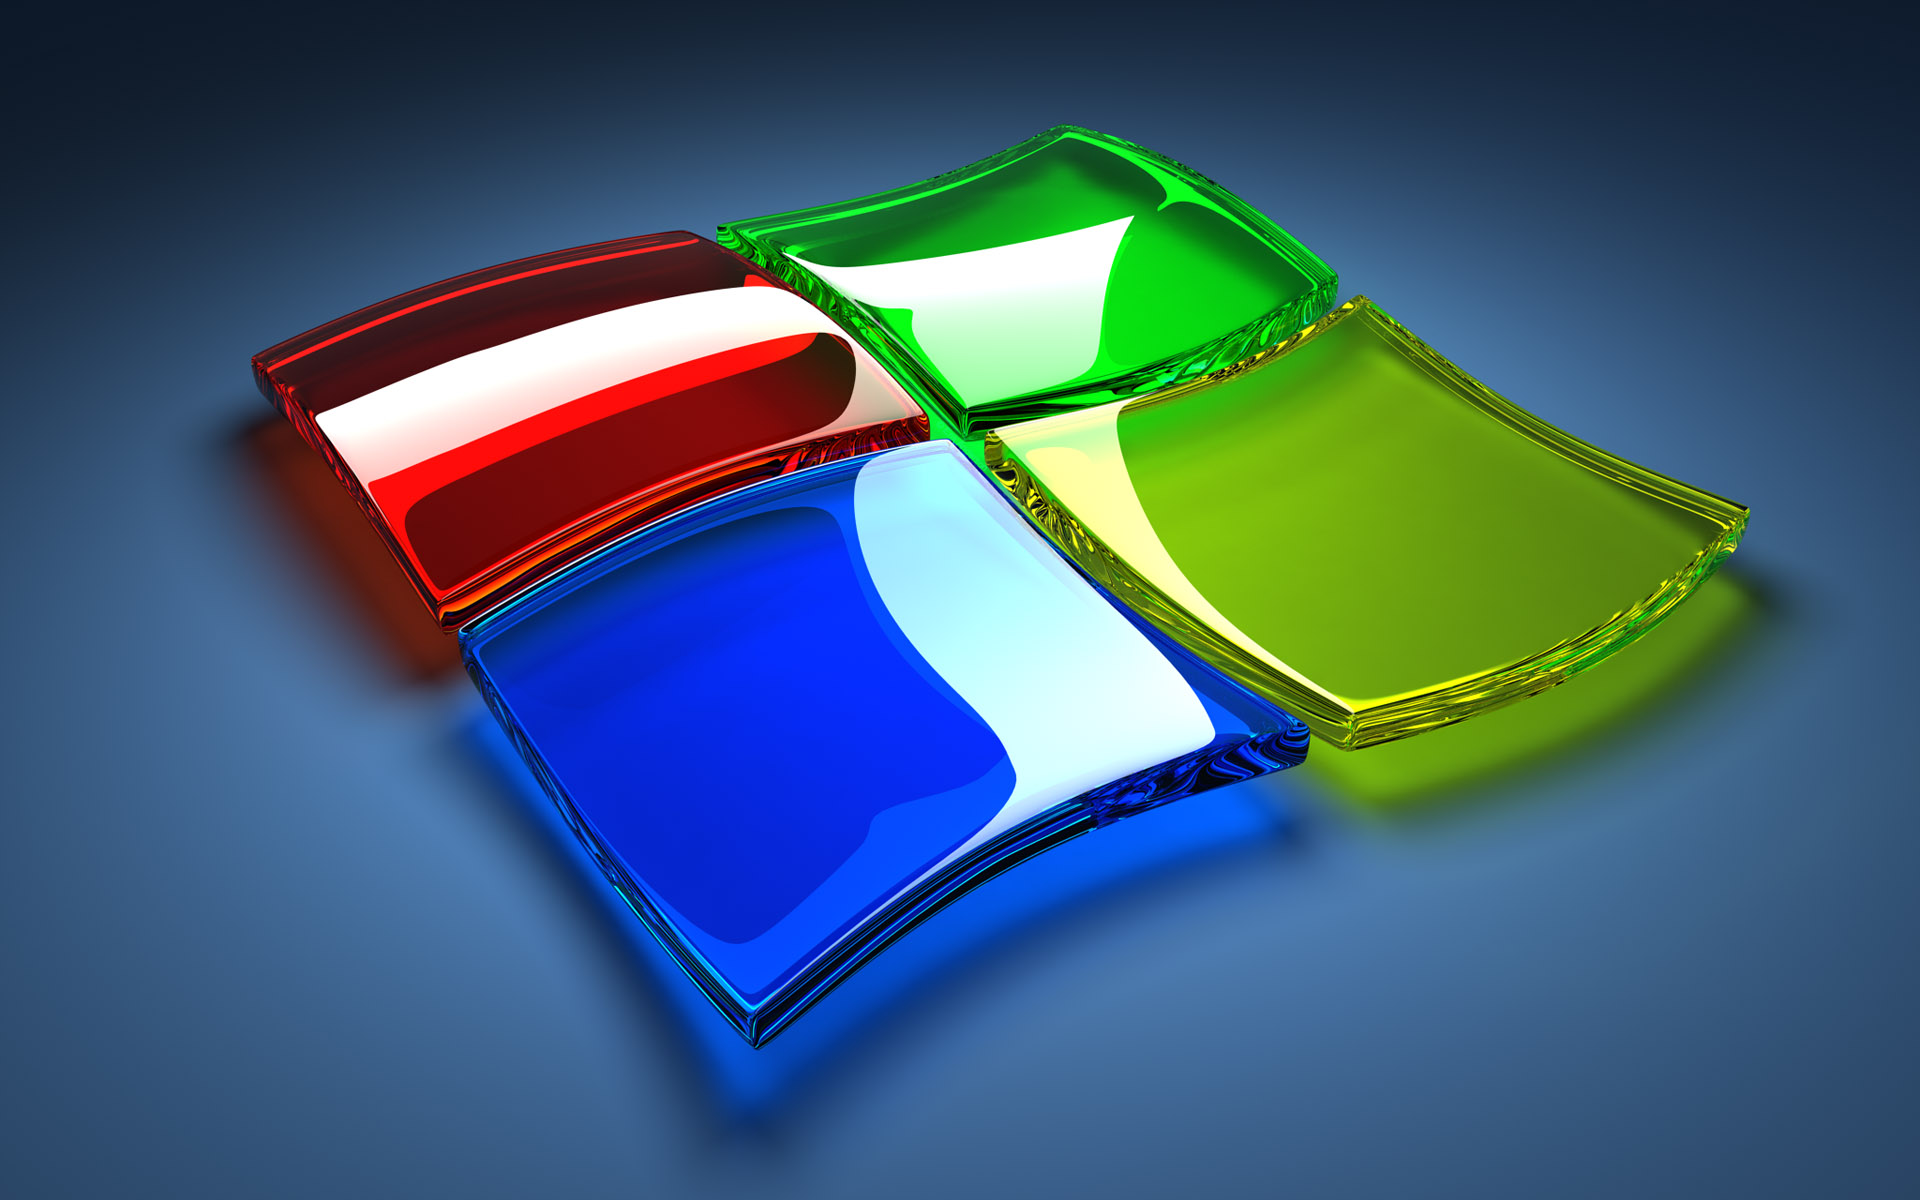 animated wallpaper desktop flag 3d for windows 7 xp vista new 3d